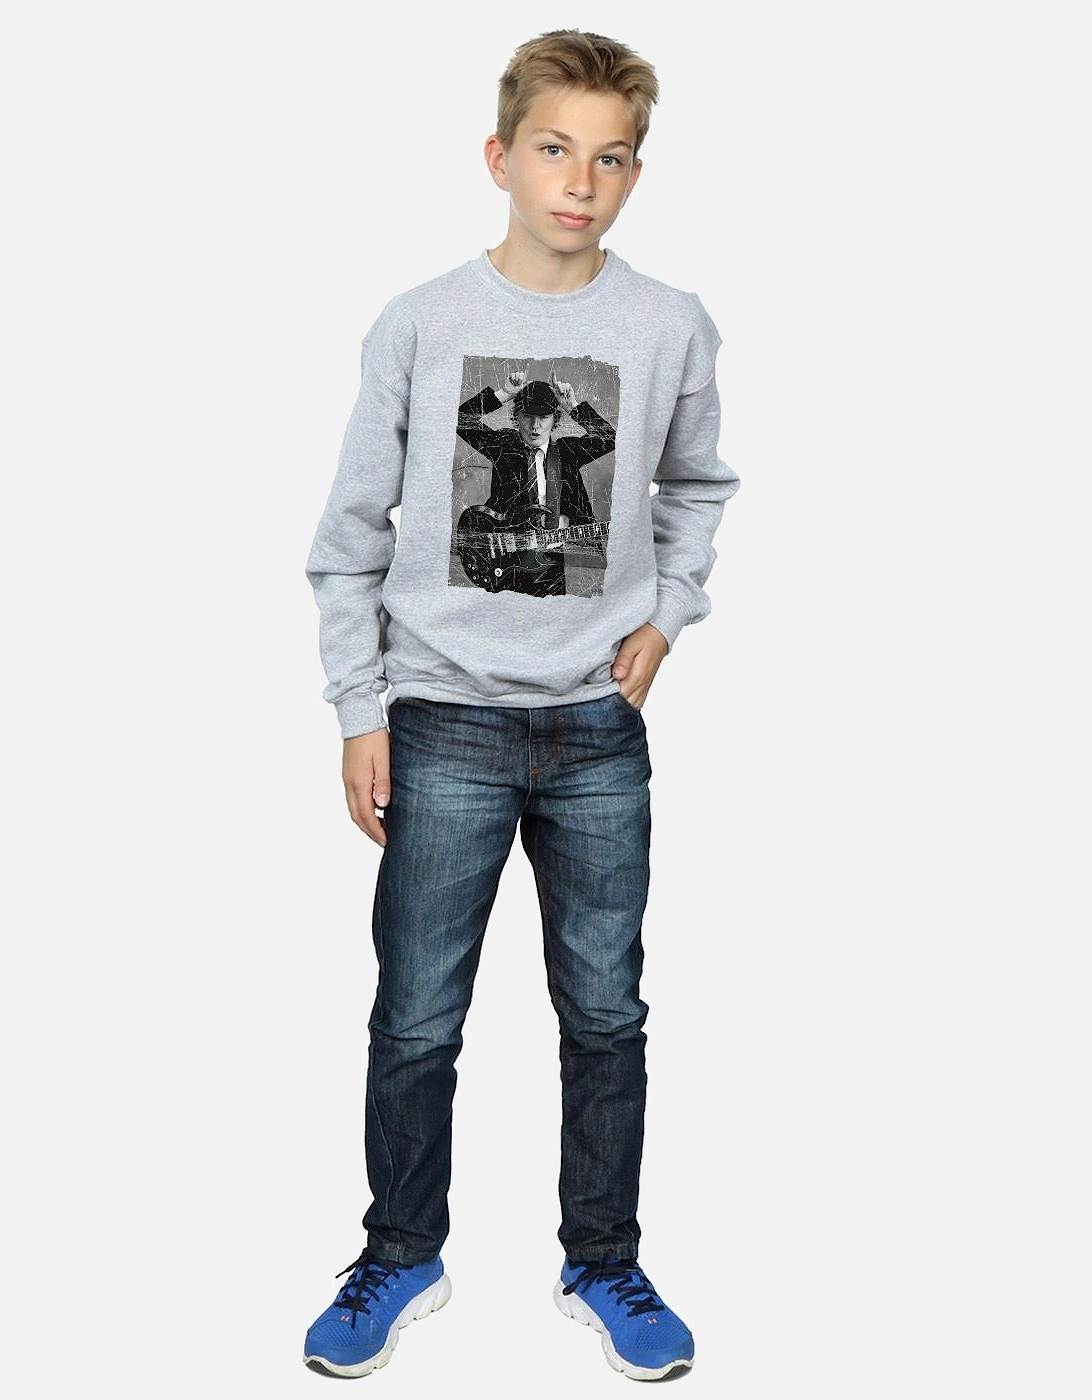 Boys Angus Young Distressed Photo Sweatshirt